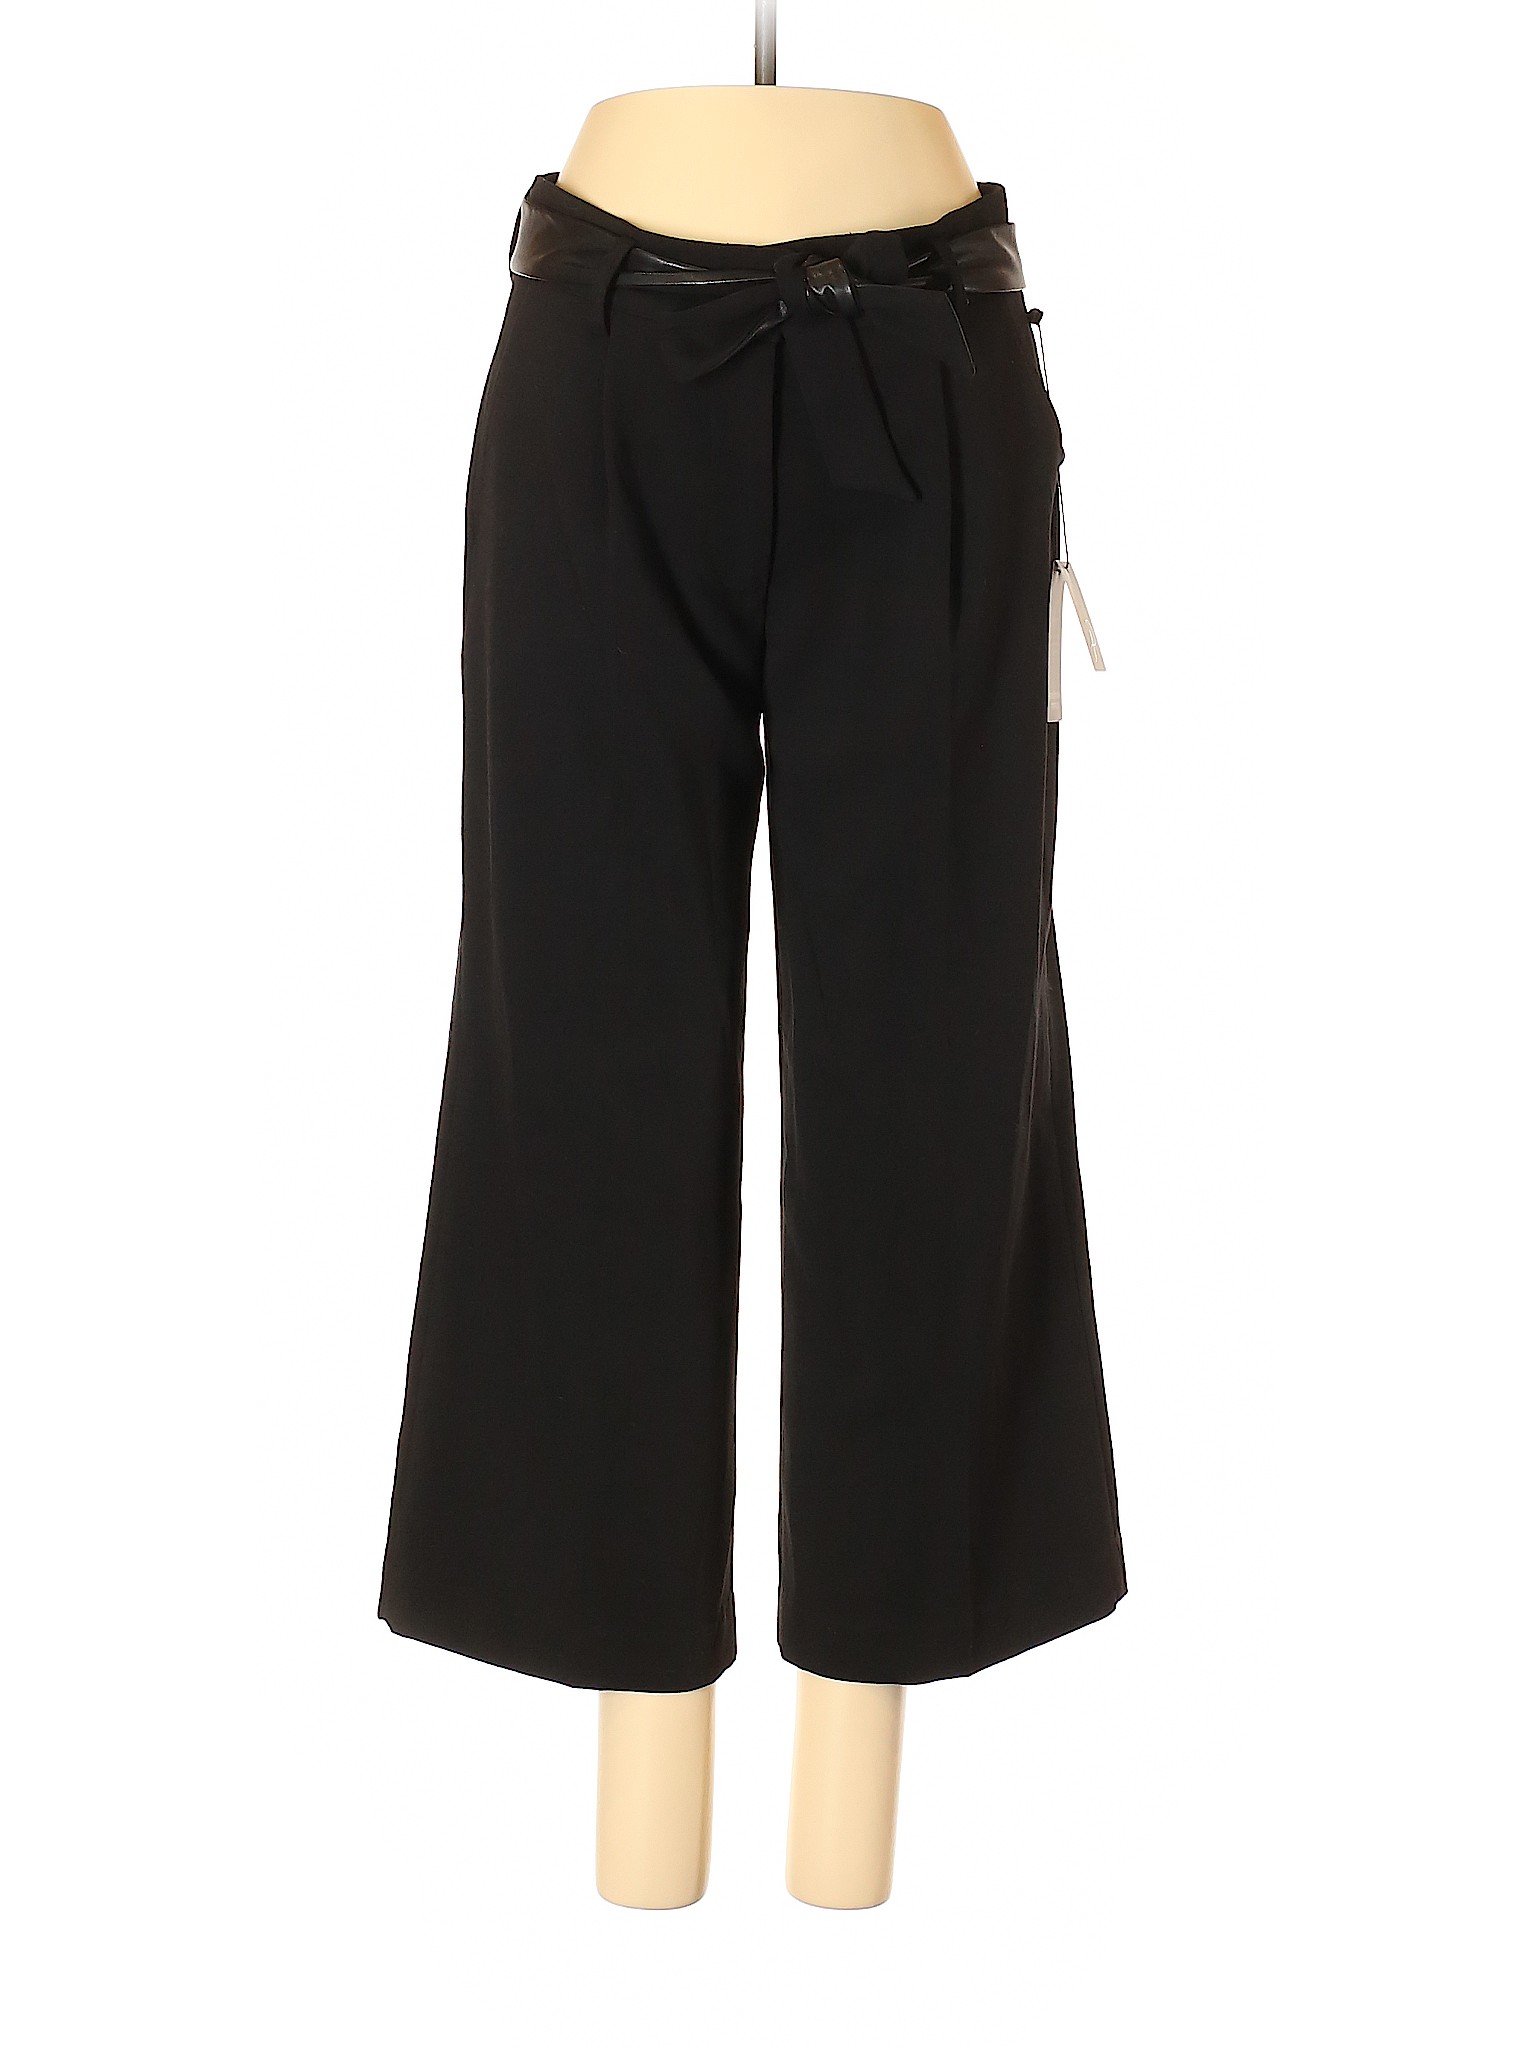 NWT Adrianna Papell Women Black Dress Pants 4 | eBay